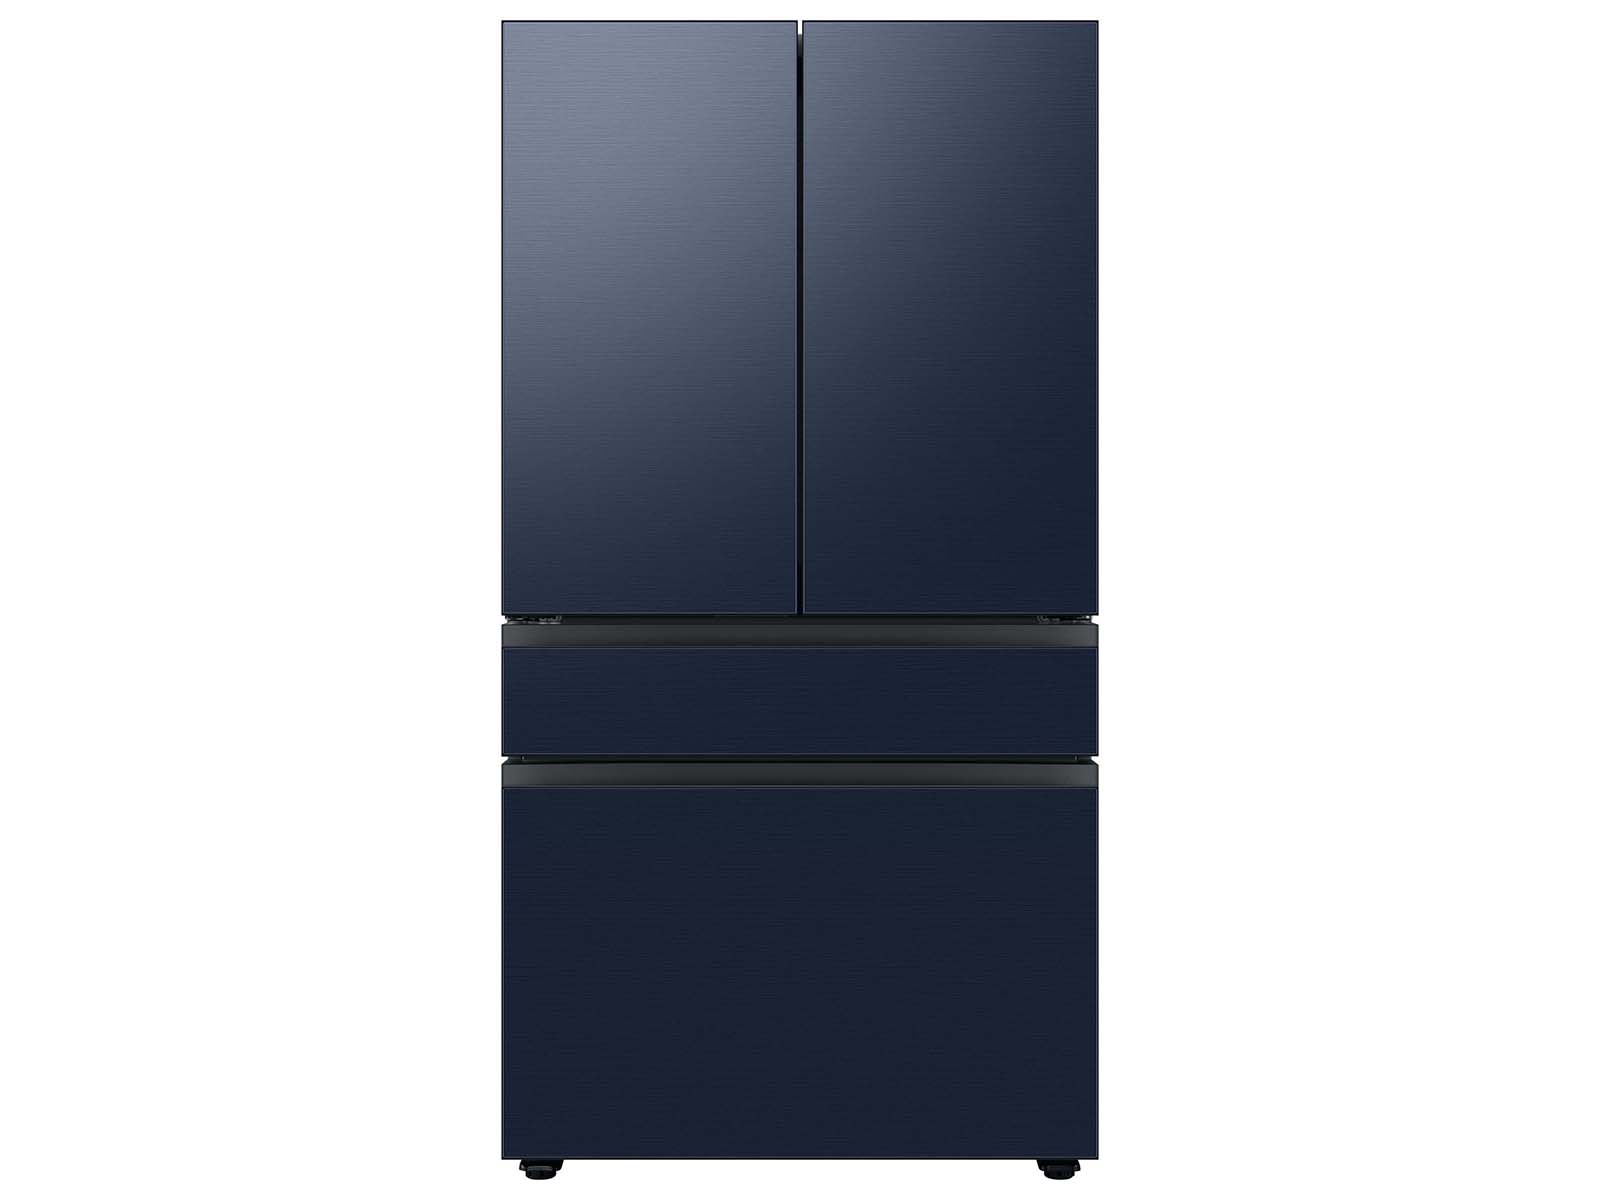 Samsung Bespoke 4-Door French Door Refrigerator in Navy Blue Steel with Stainless Steel Middle Panel (23 cu. ft.) with Customizable Door Panel Colors and Beverage Center™ in Navy Steel with Stainless Steel Middle Panel